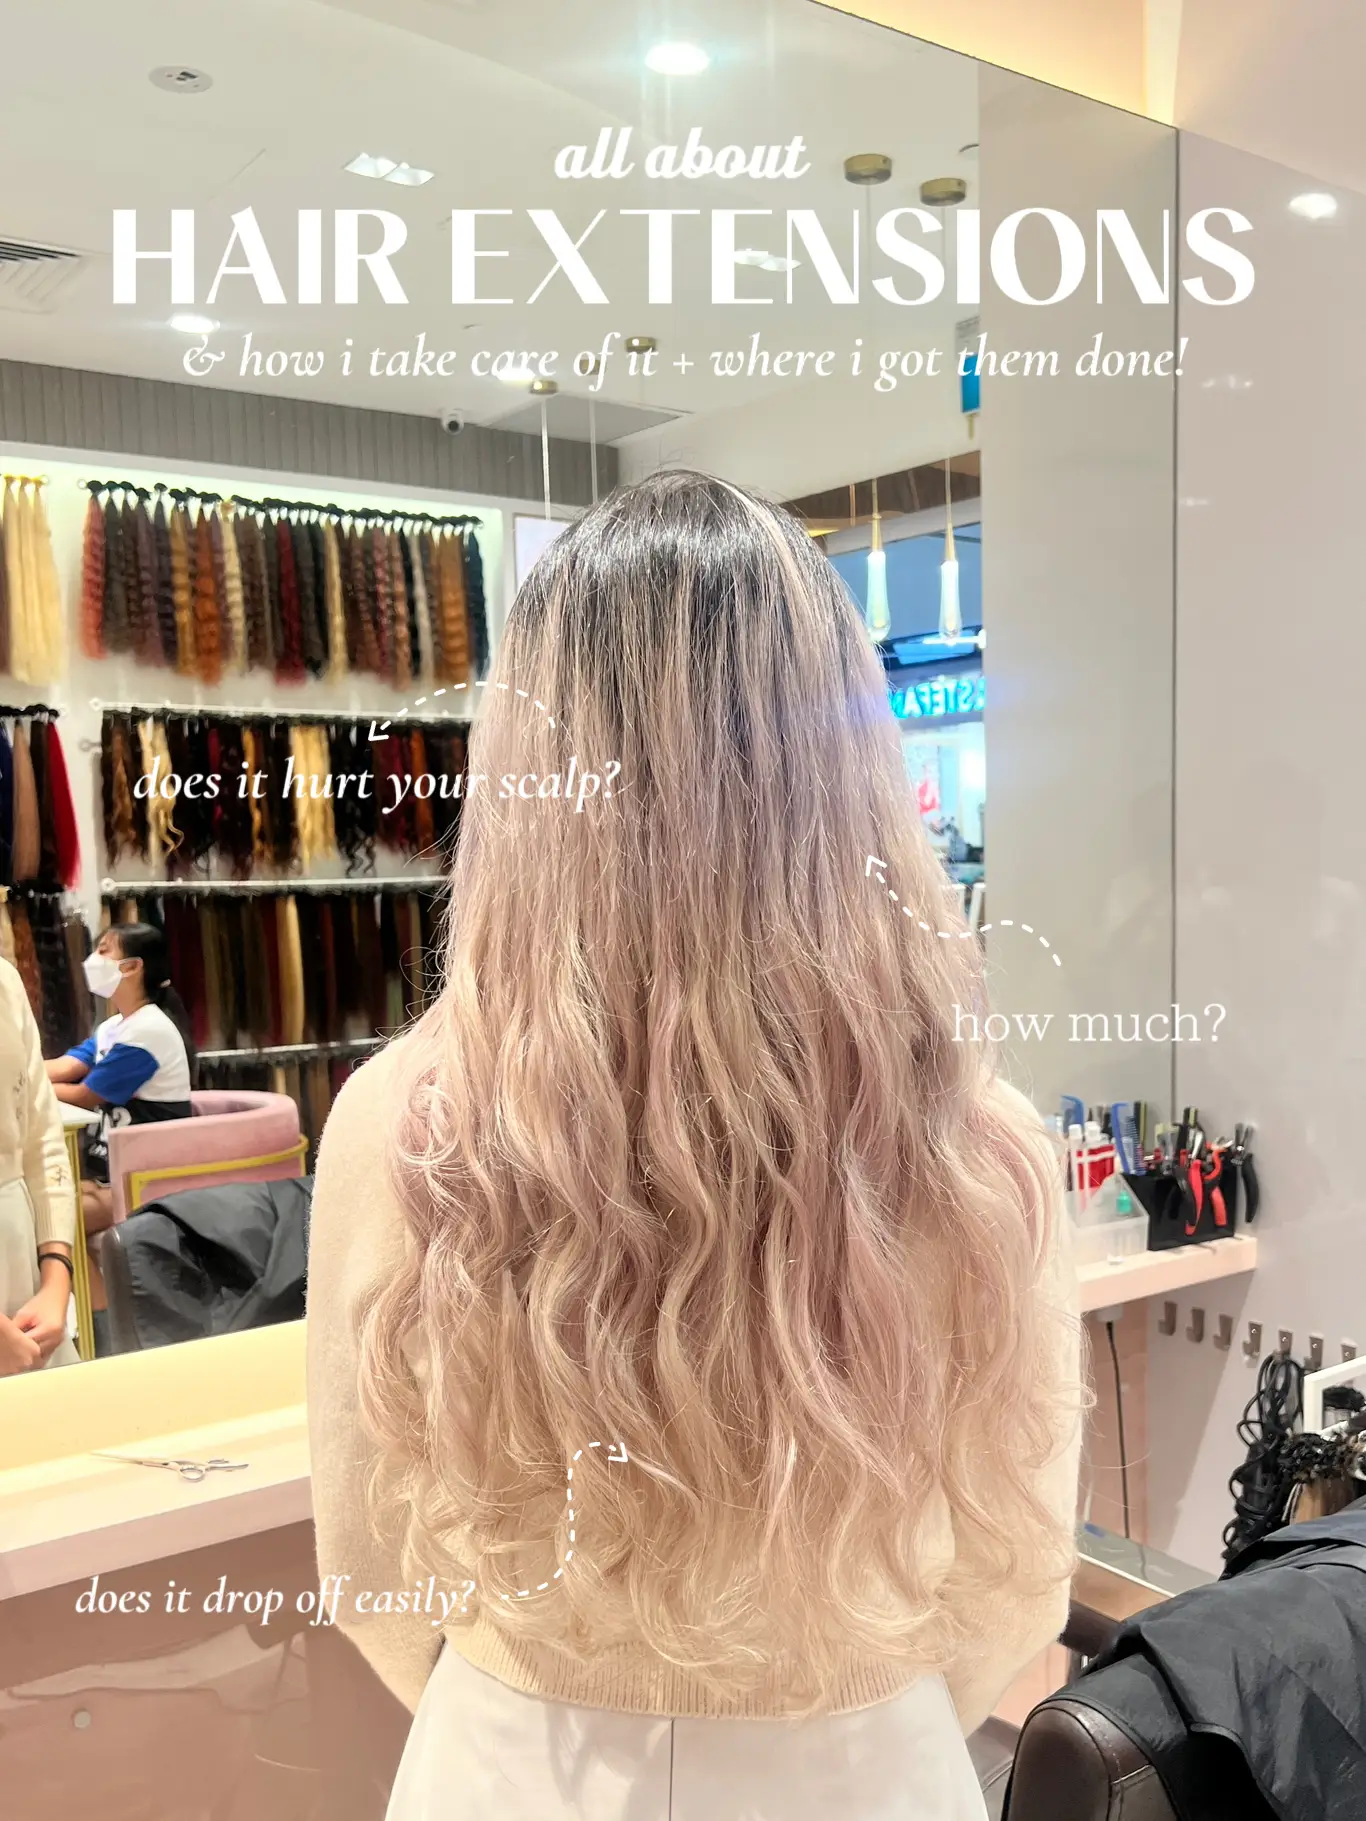 hair extensions for short hair - Lemon8 Search